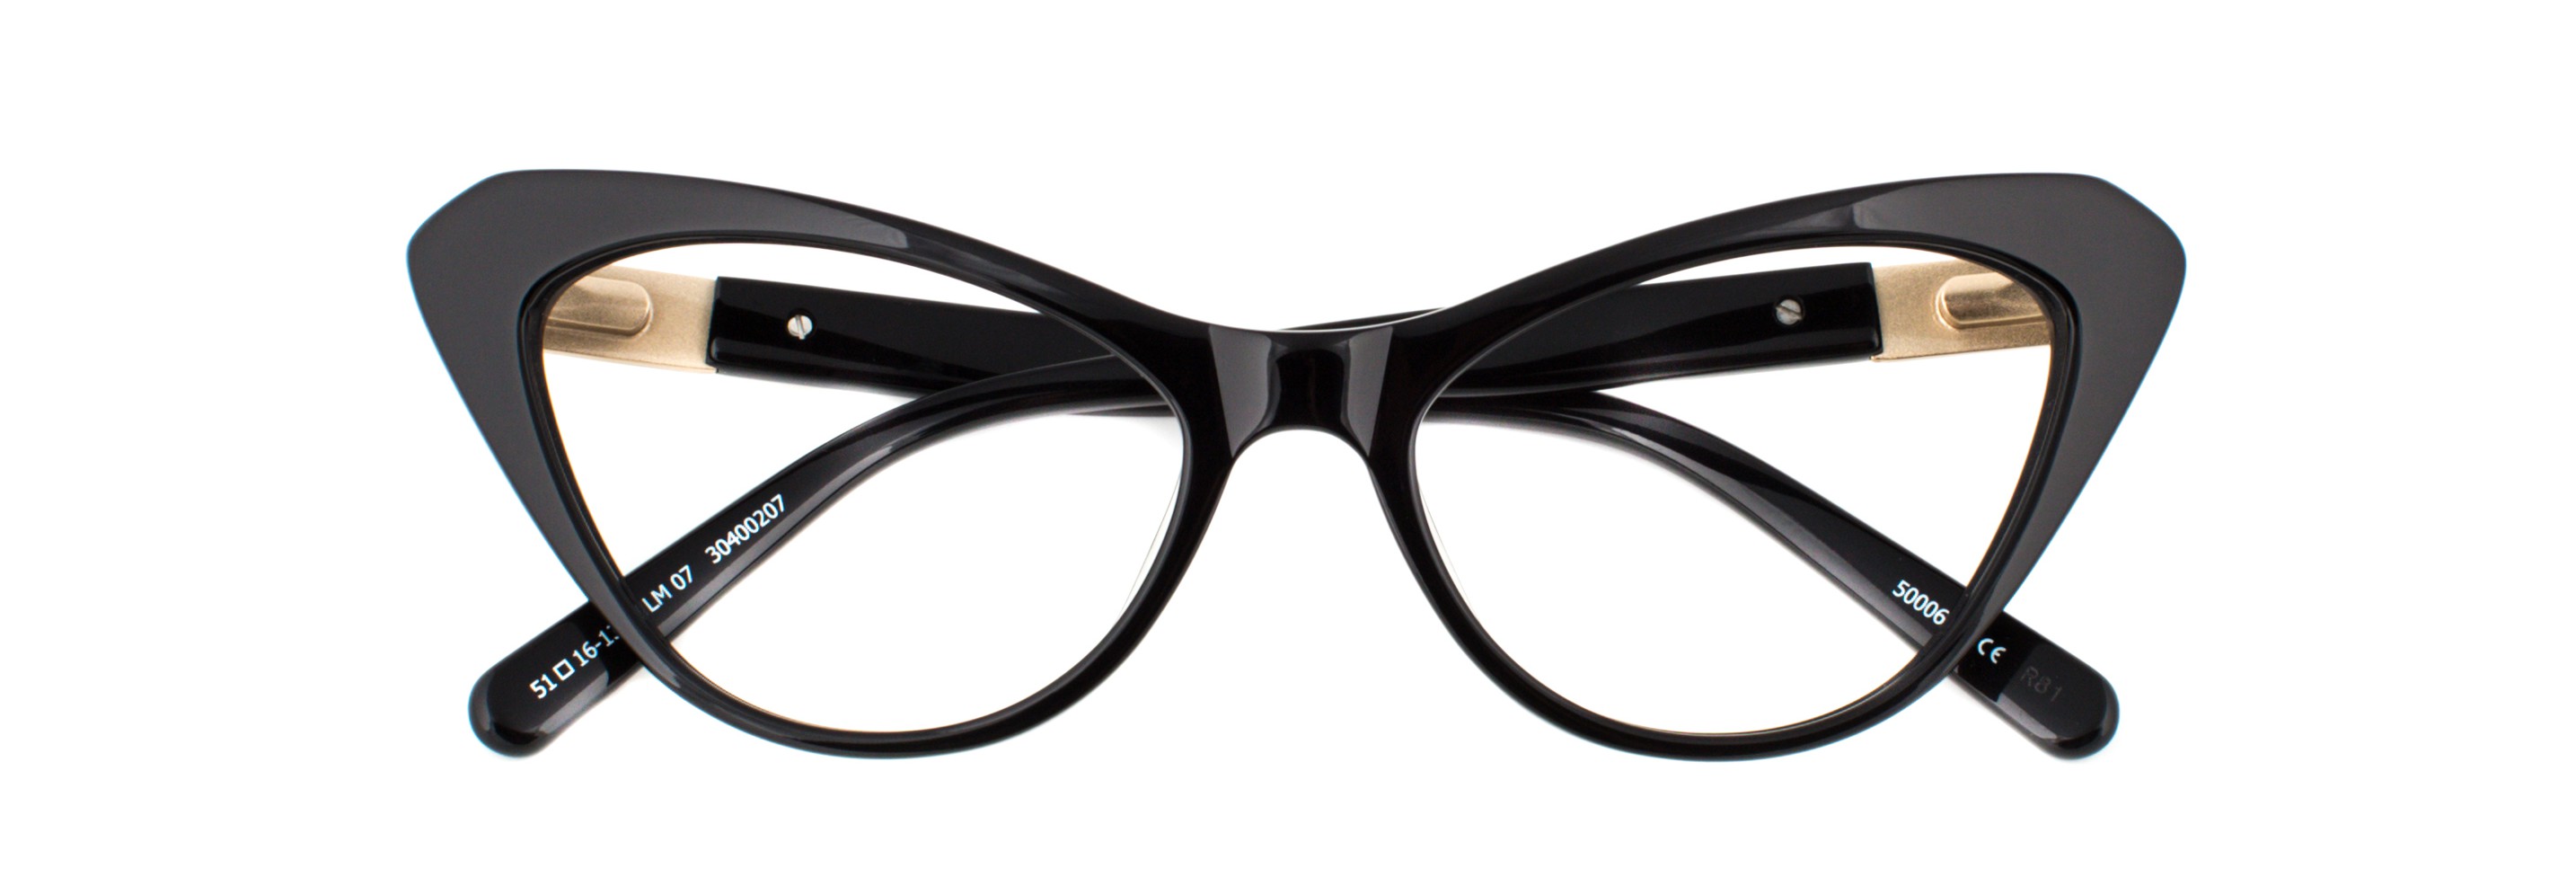 moschino glasses specsavers